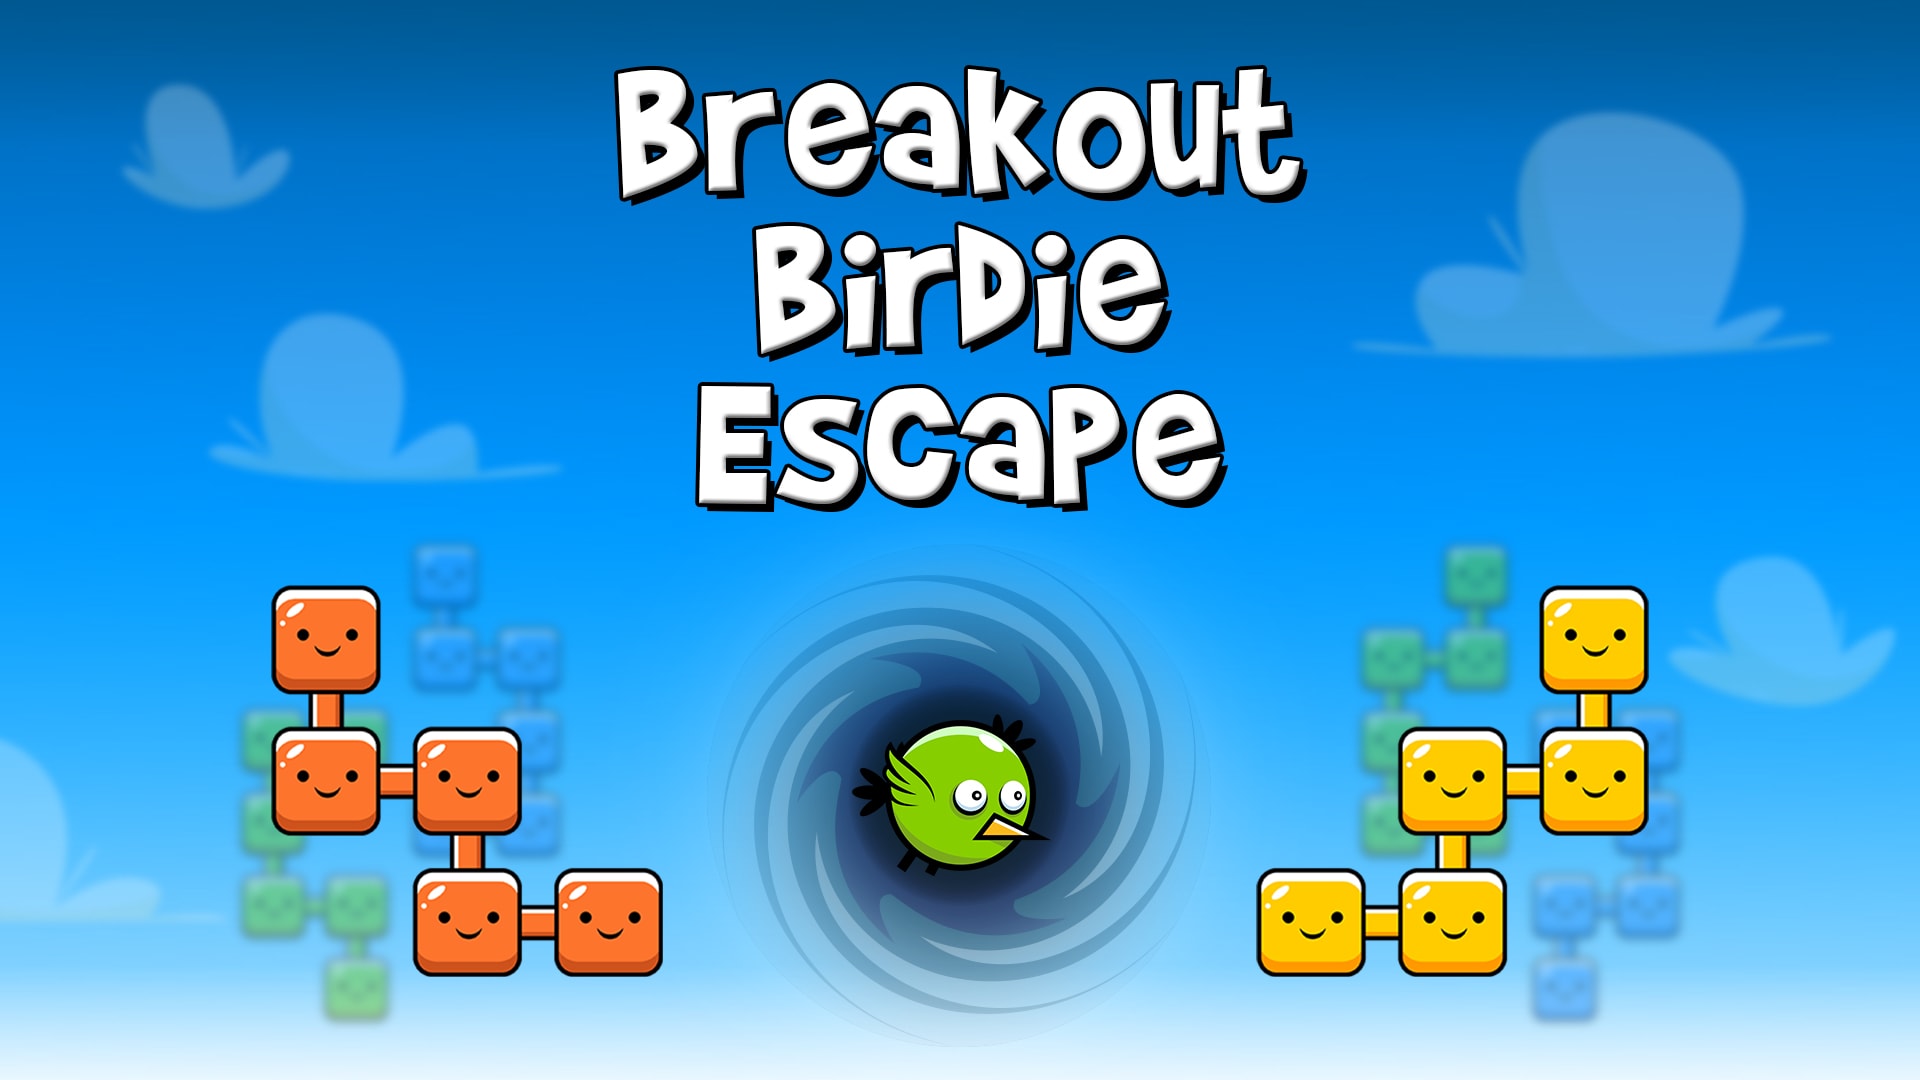 Breakout Birdie Escape